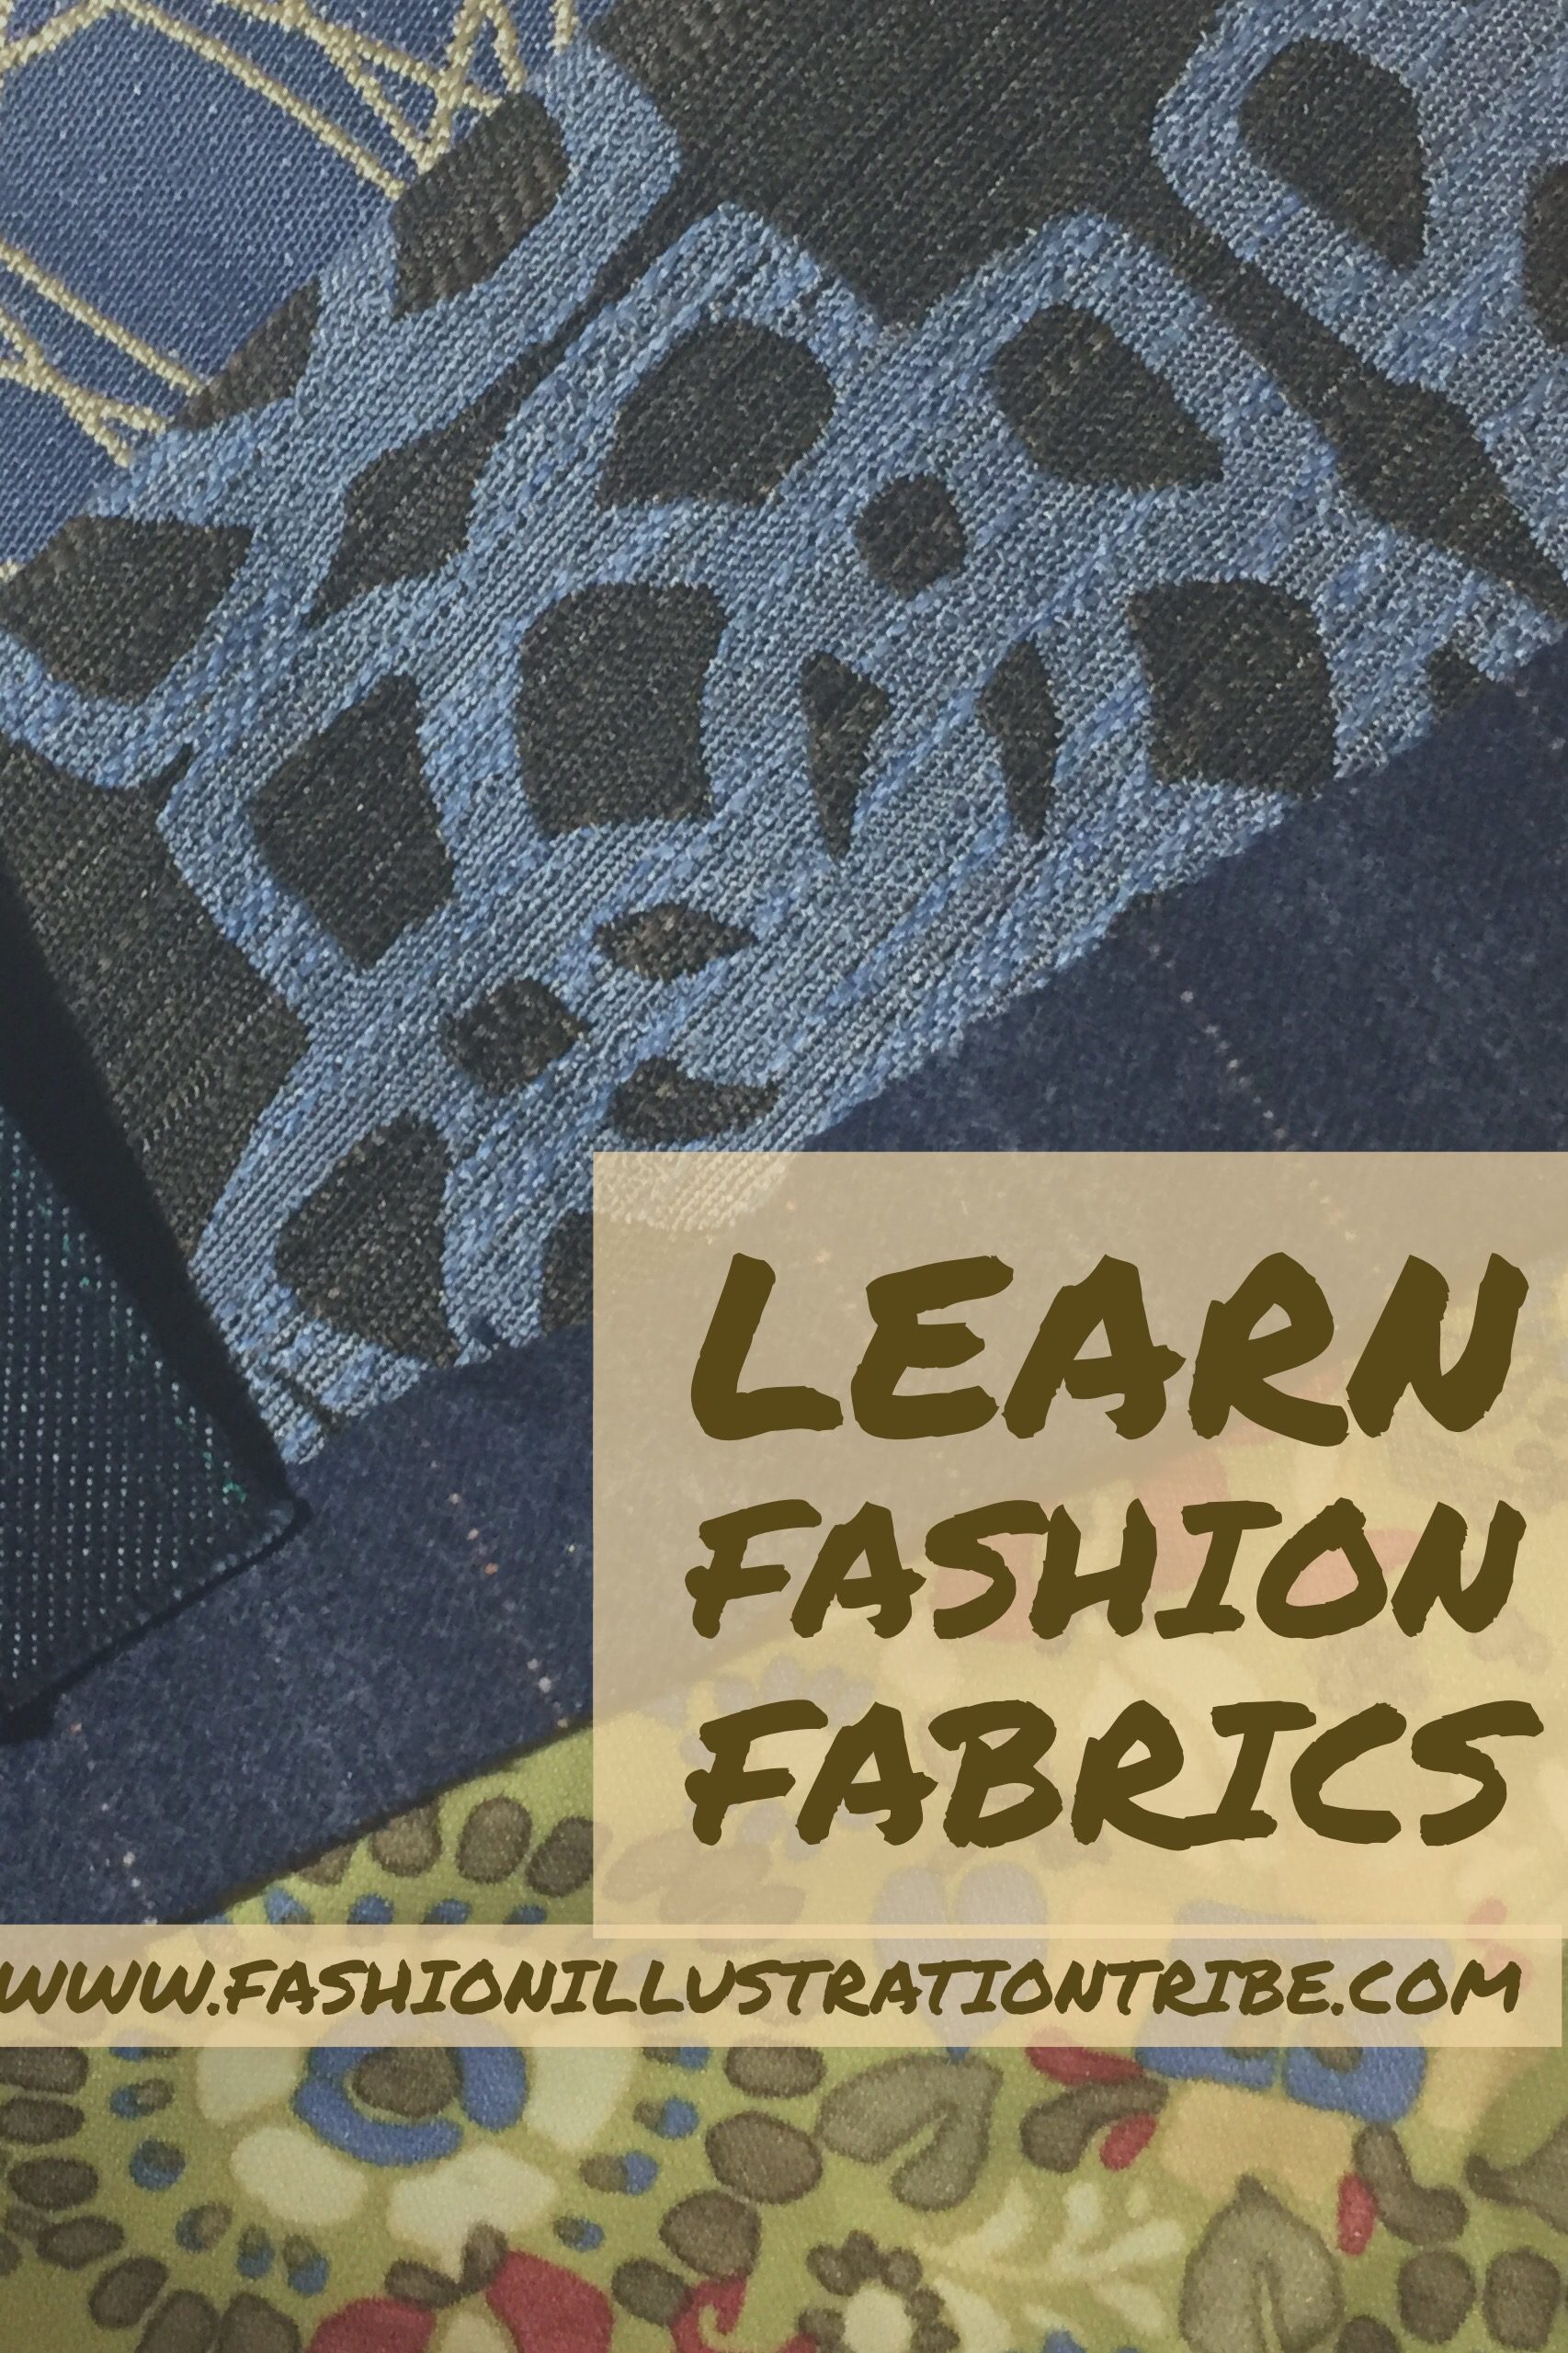 Learn fashion fabrics with Laura Volpintesta, fashion illustration tribe.